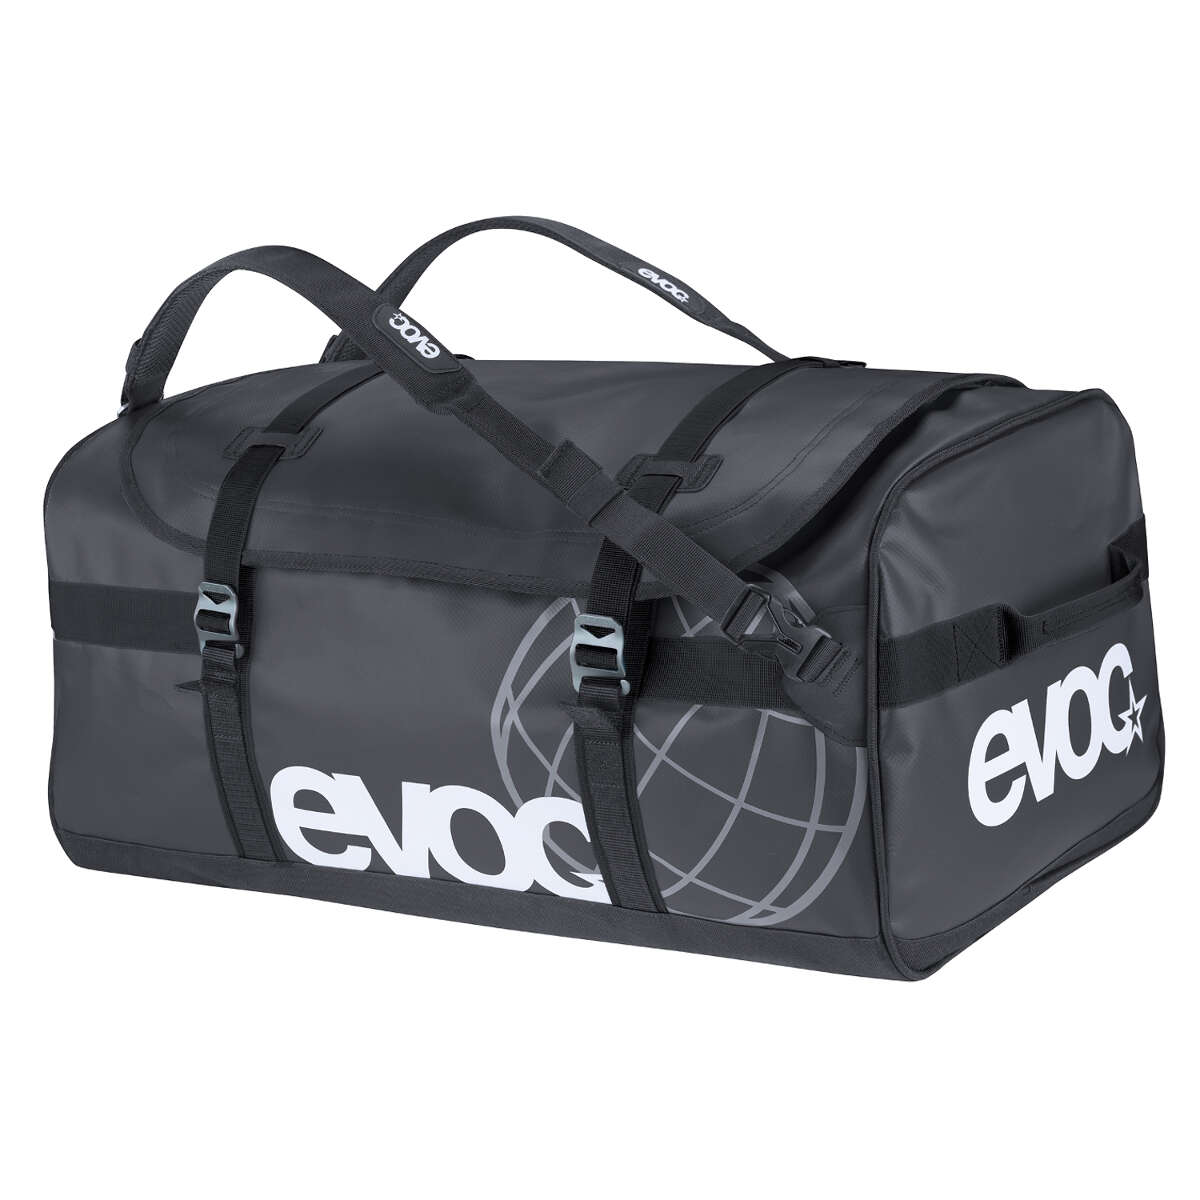 Evoc Travel Bag Duffle Bag Black, 40 Liter